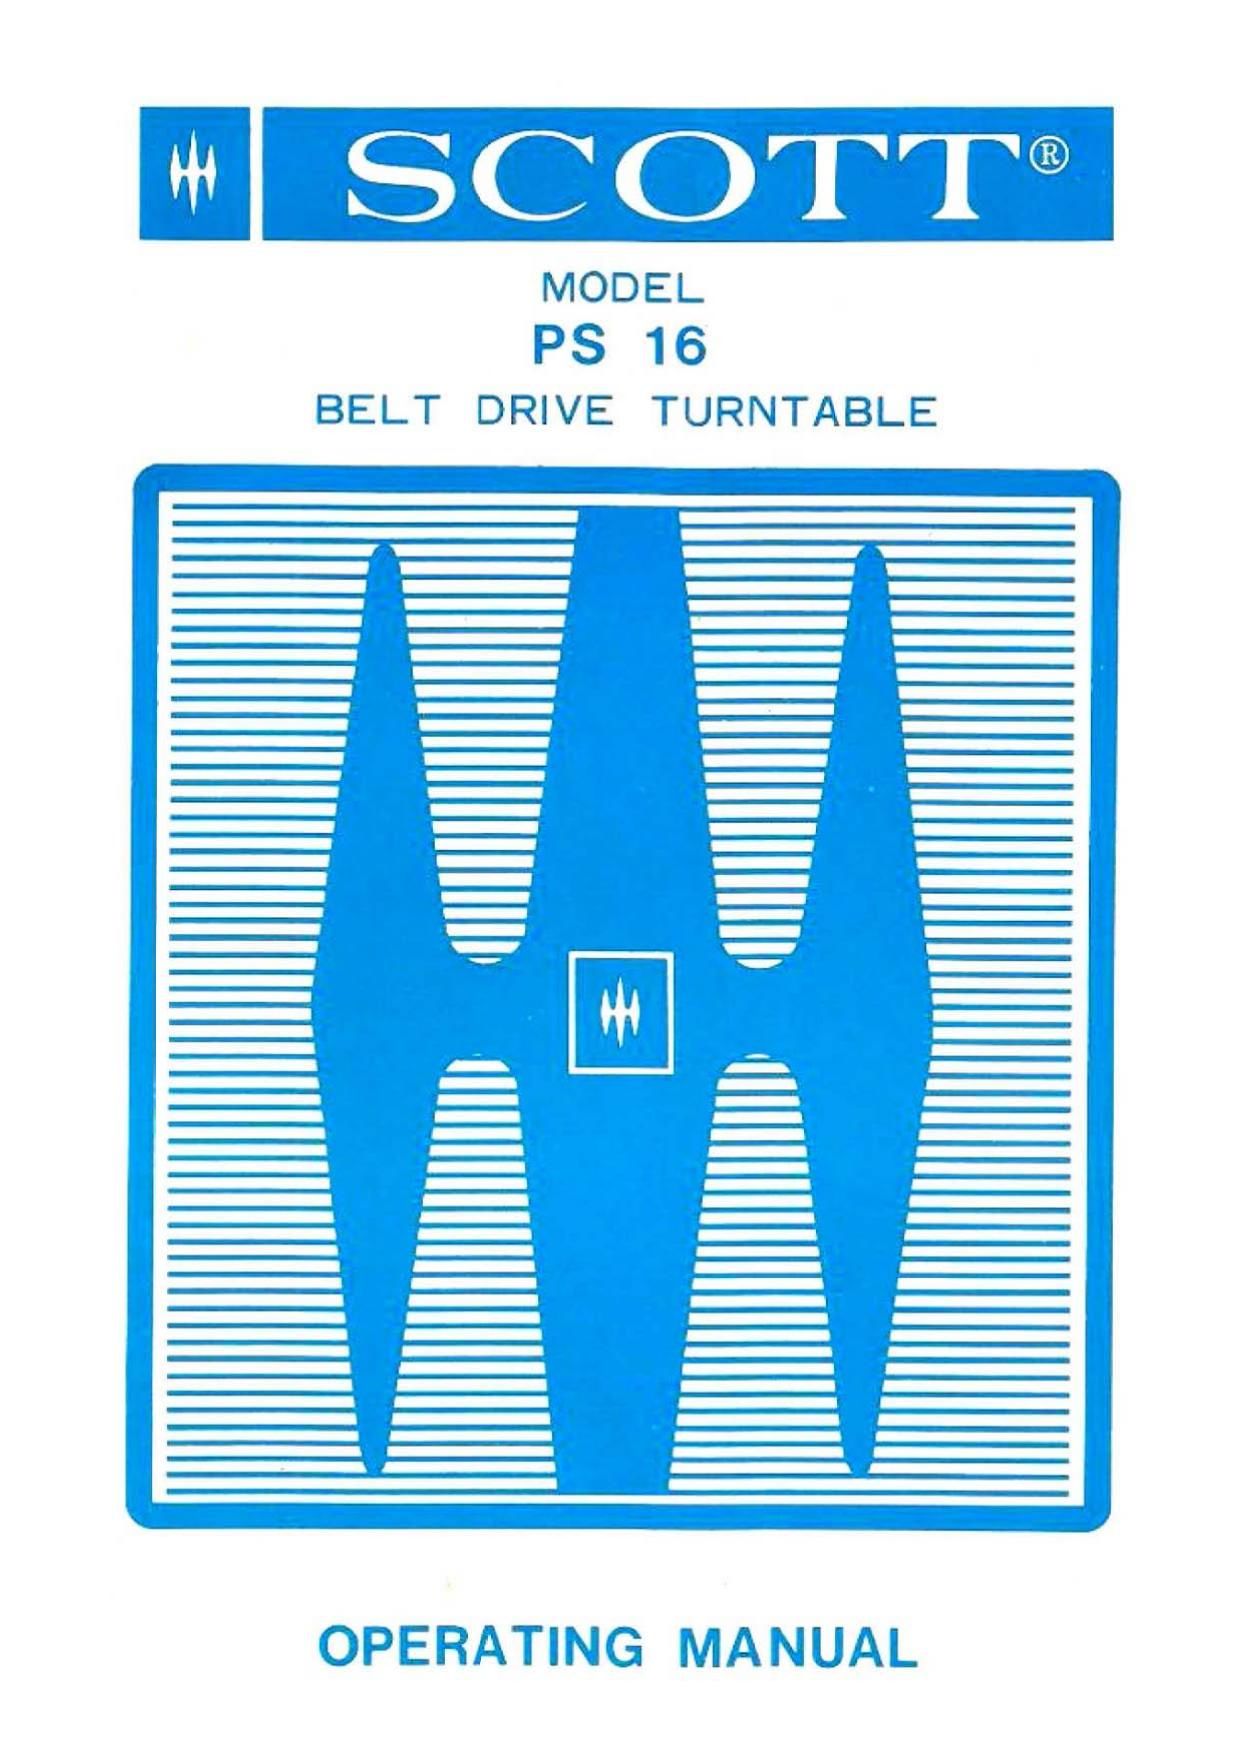 Scott PS 16 Owners Manual